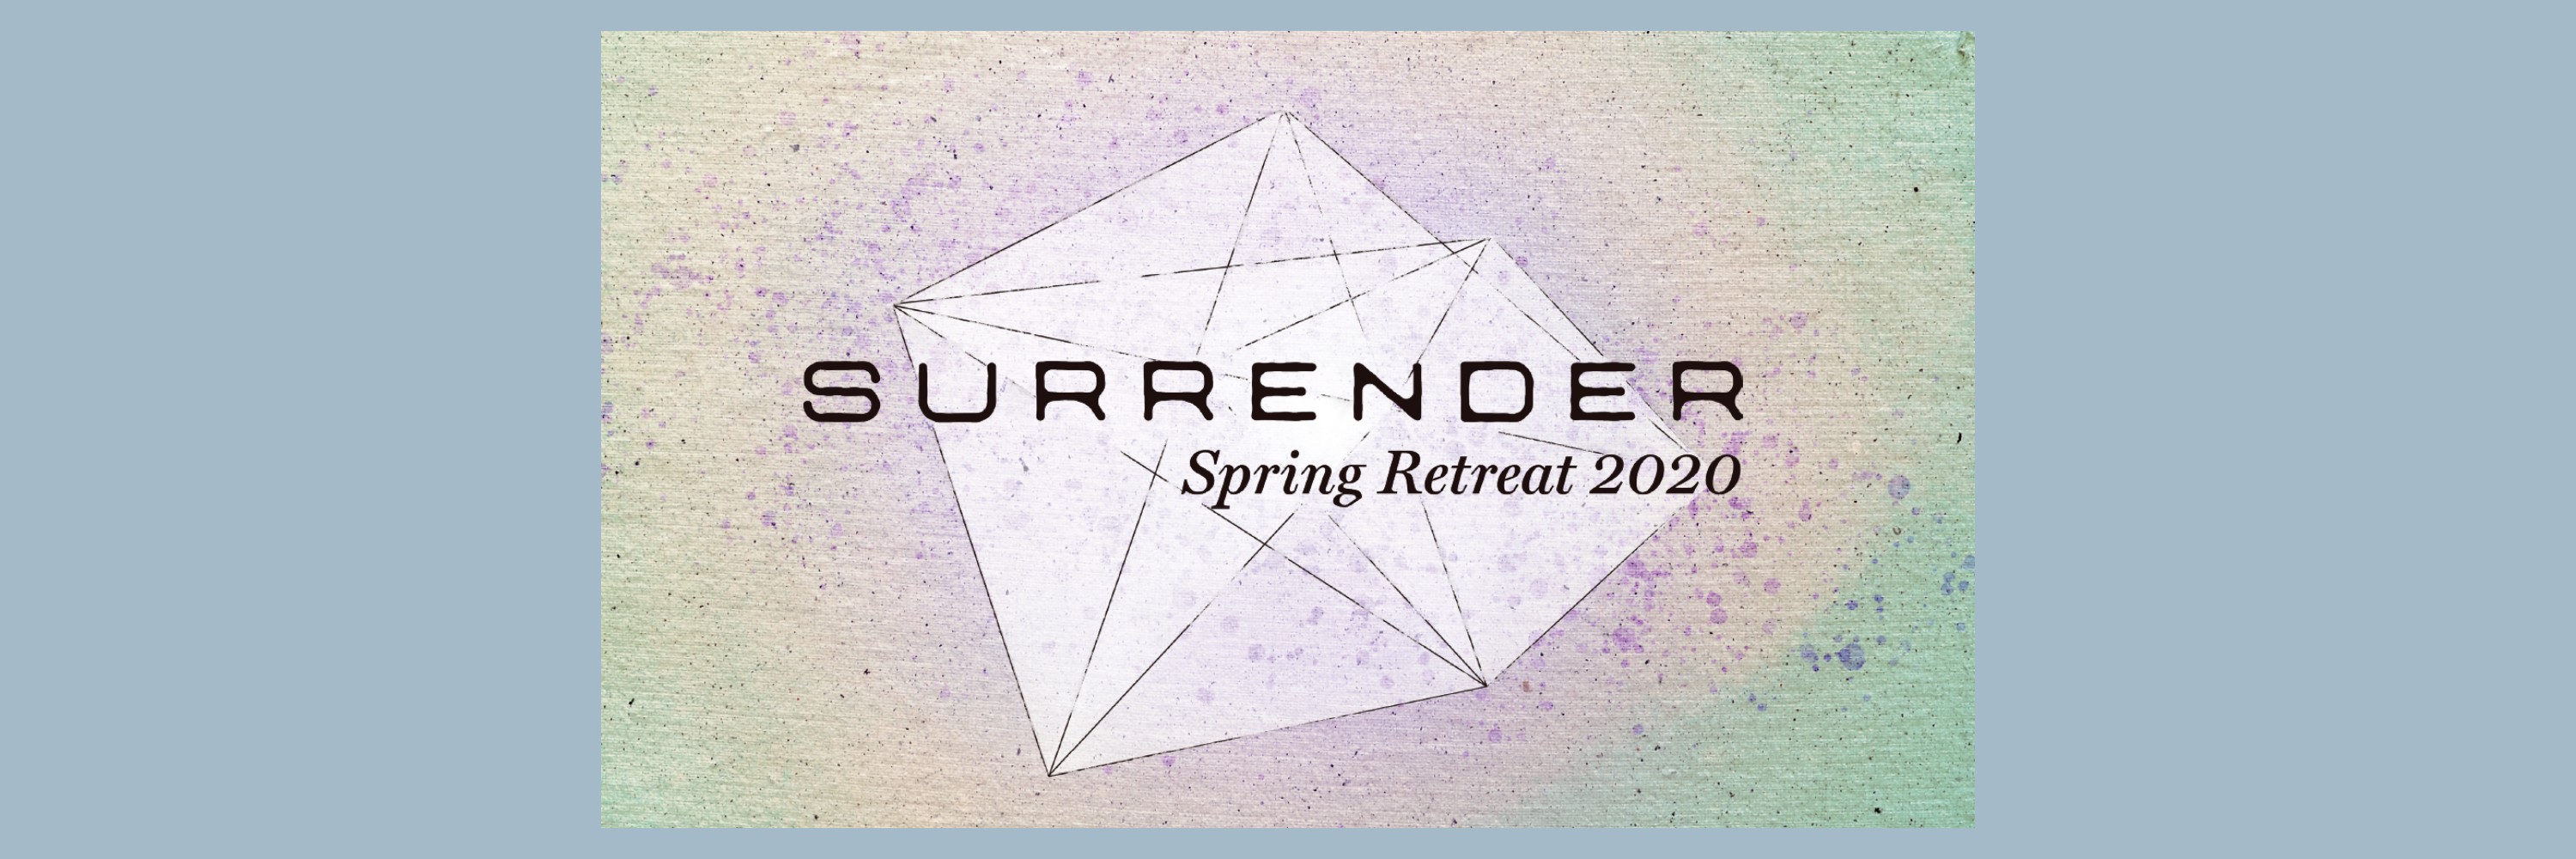 Surrender: Spring Retreat 2020